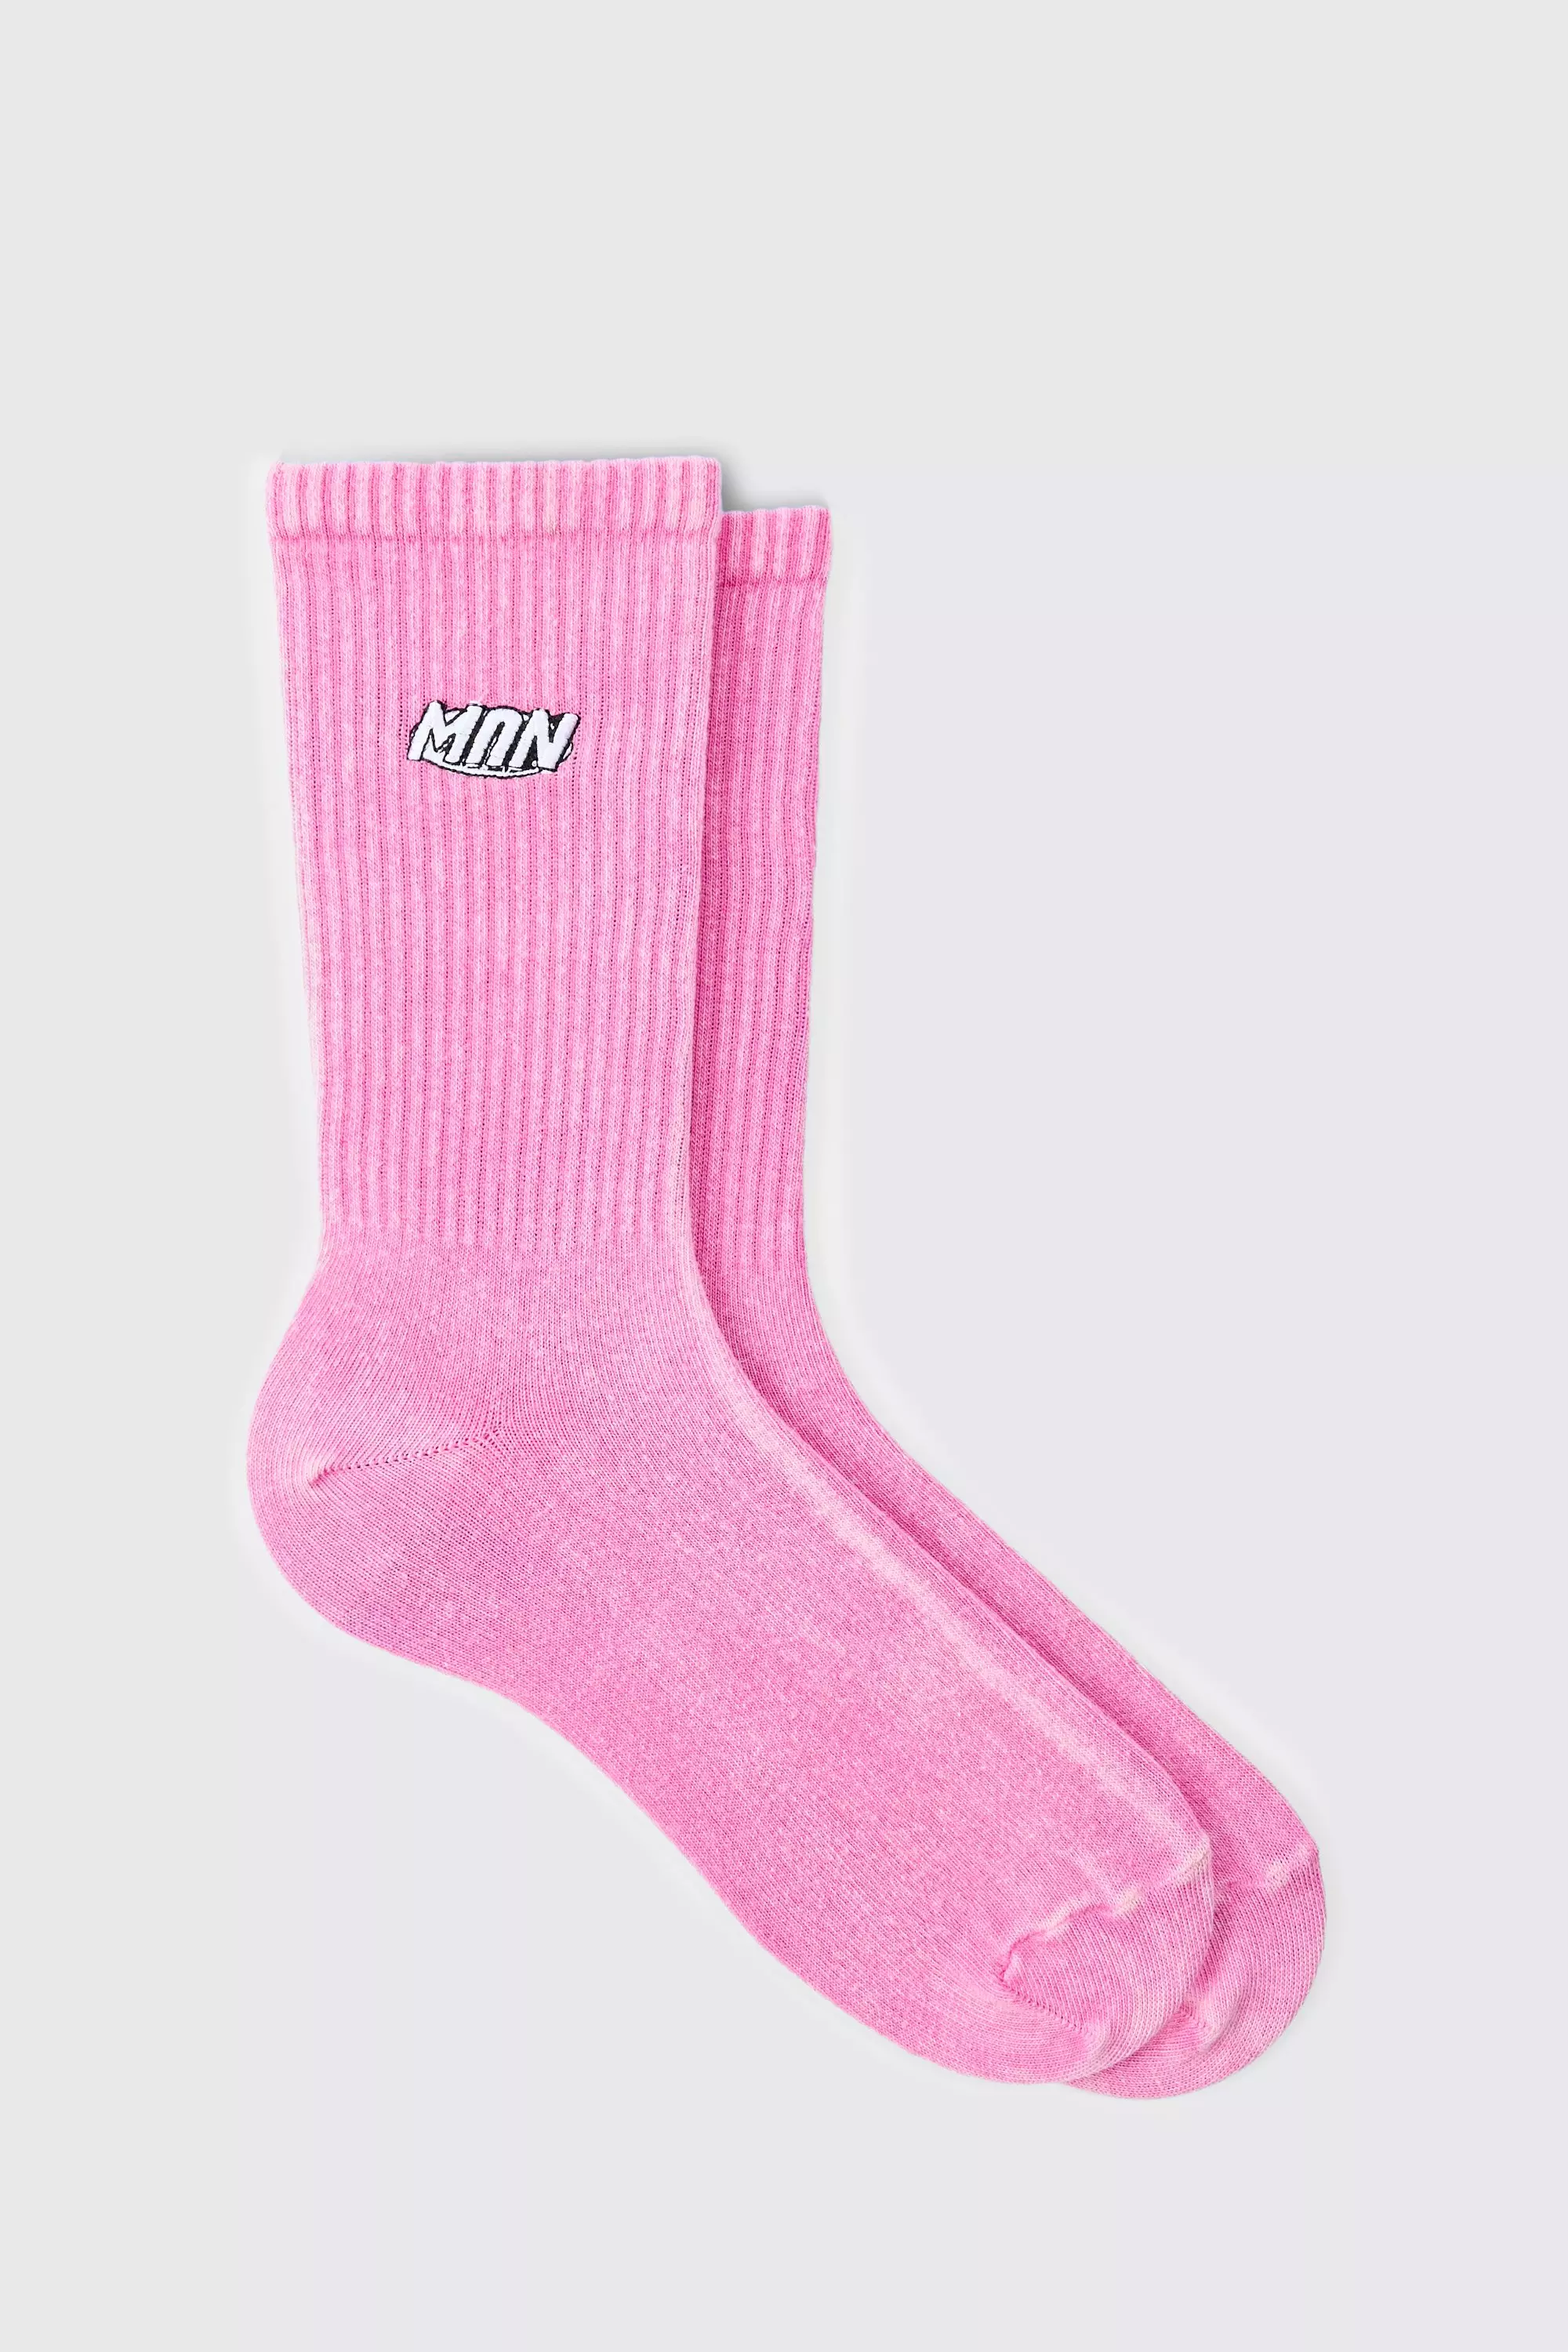 Acid Wash Man Socks In Pink Pink